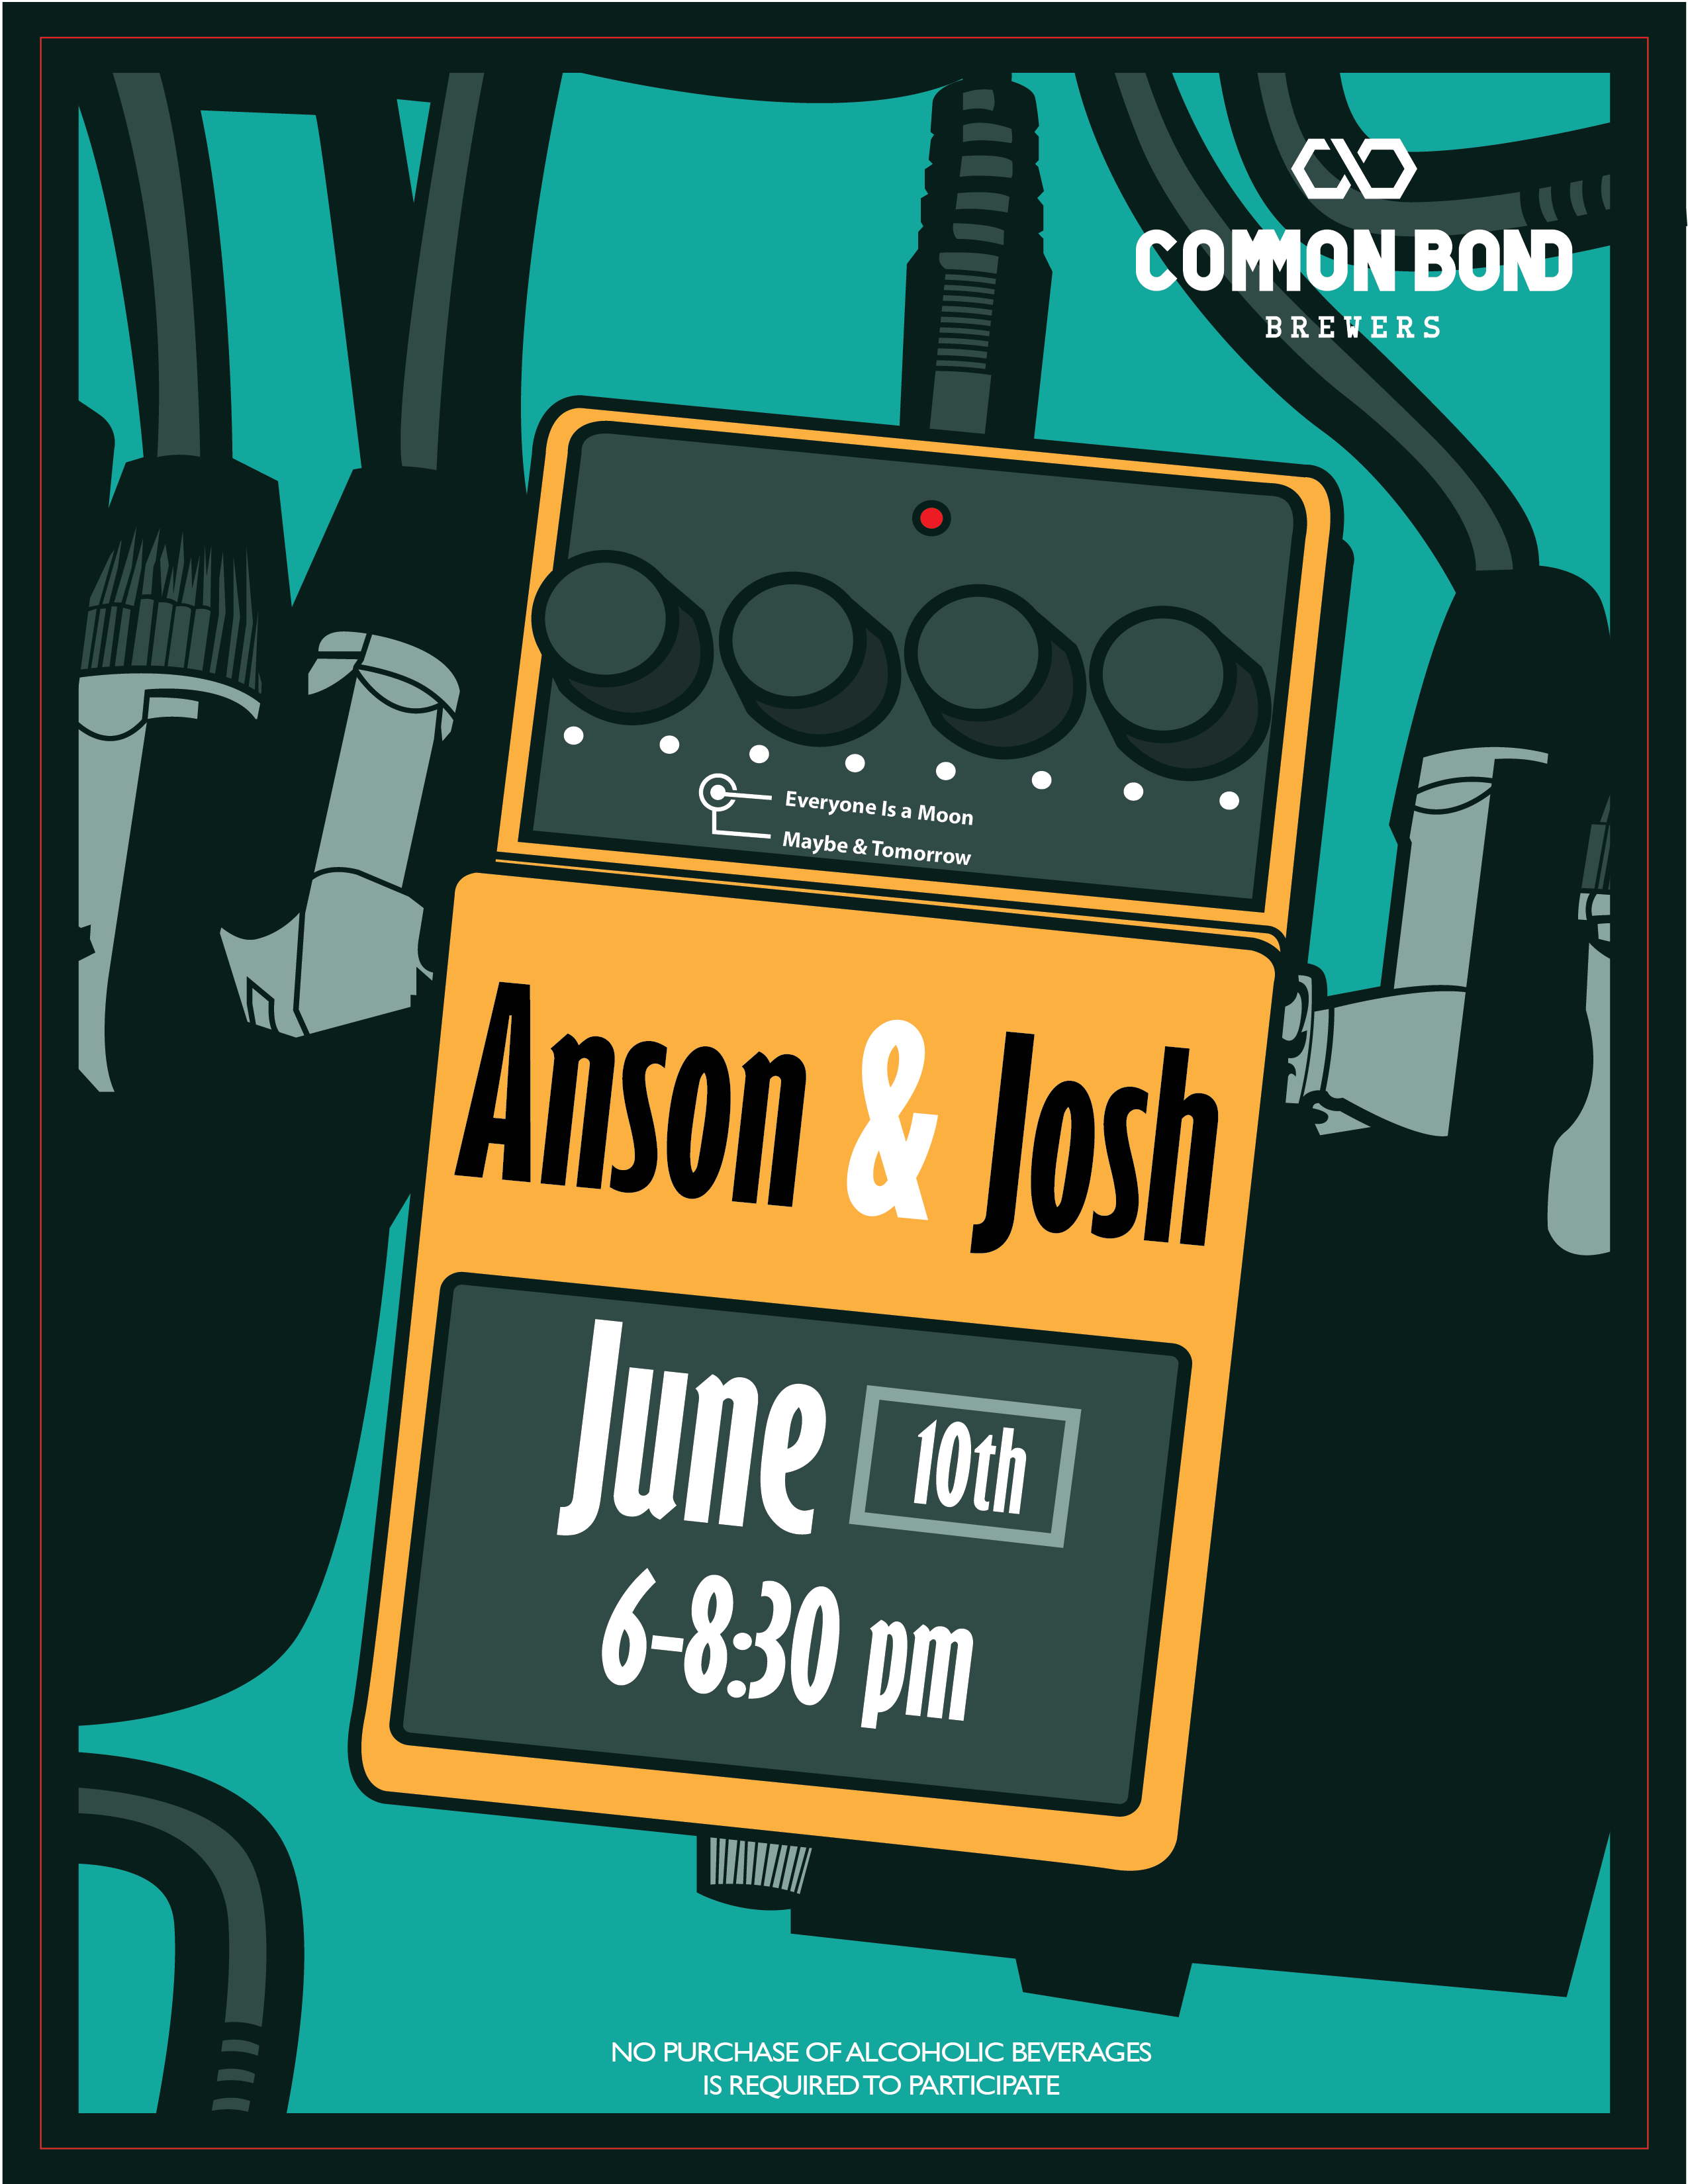 Music Night with Anson & Josh